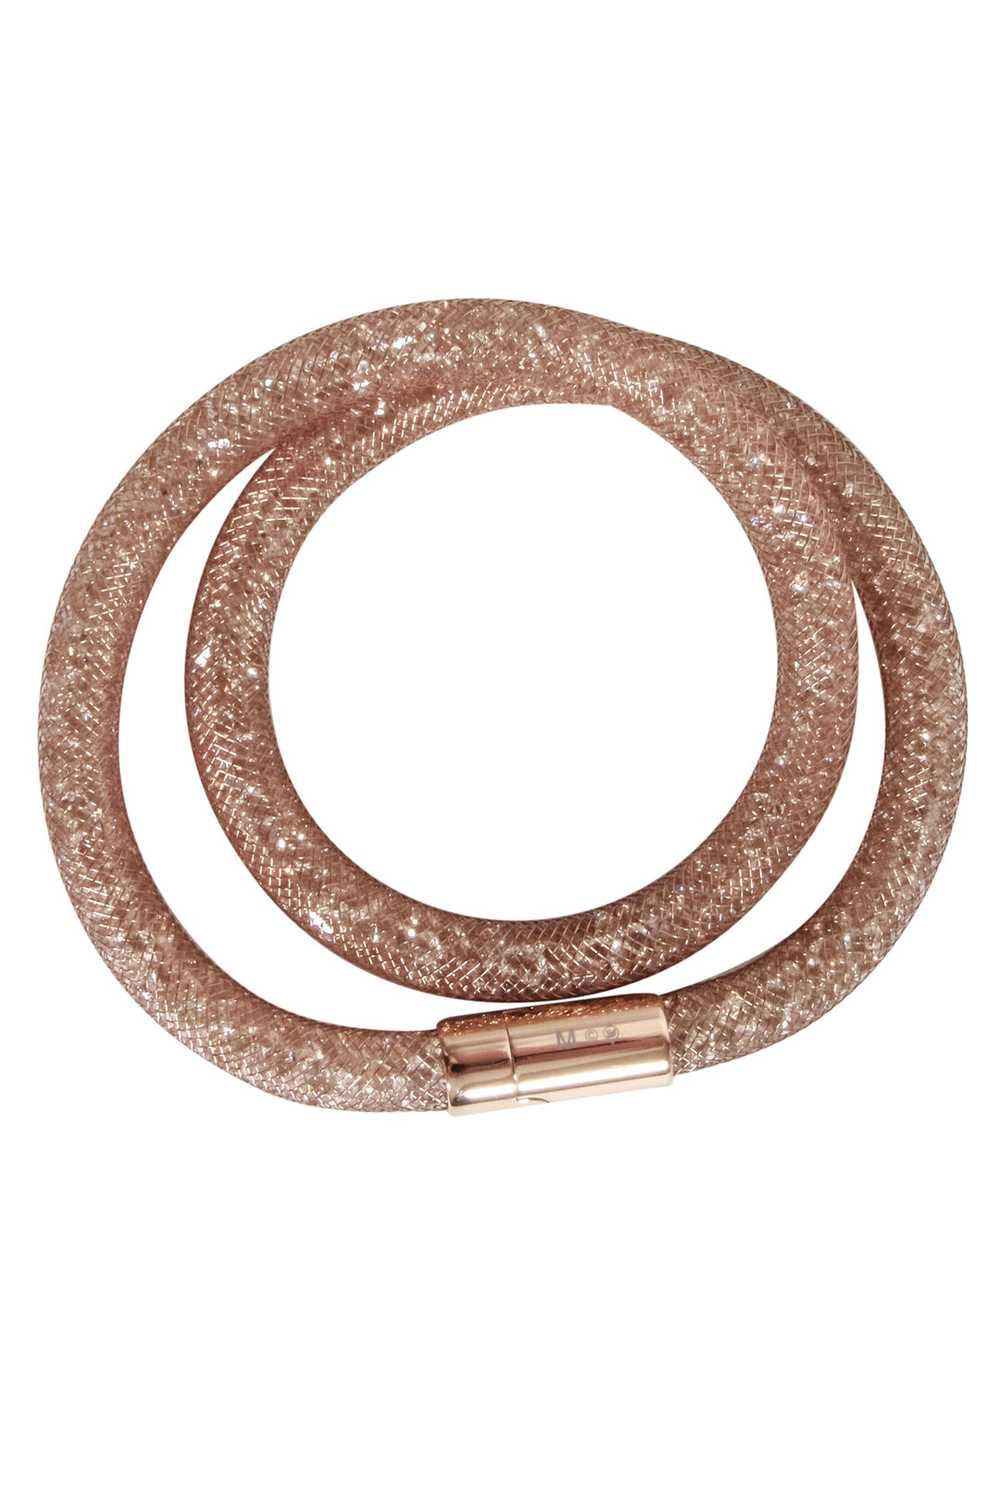 Swarovski - Gold “Stardust” Double Wrap Bracelet - image 2